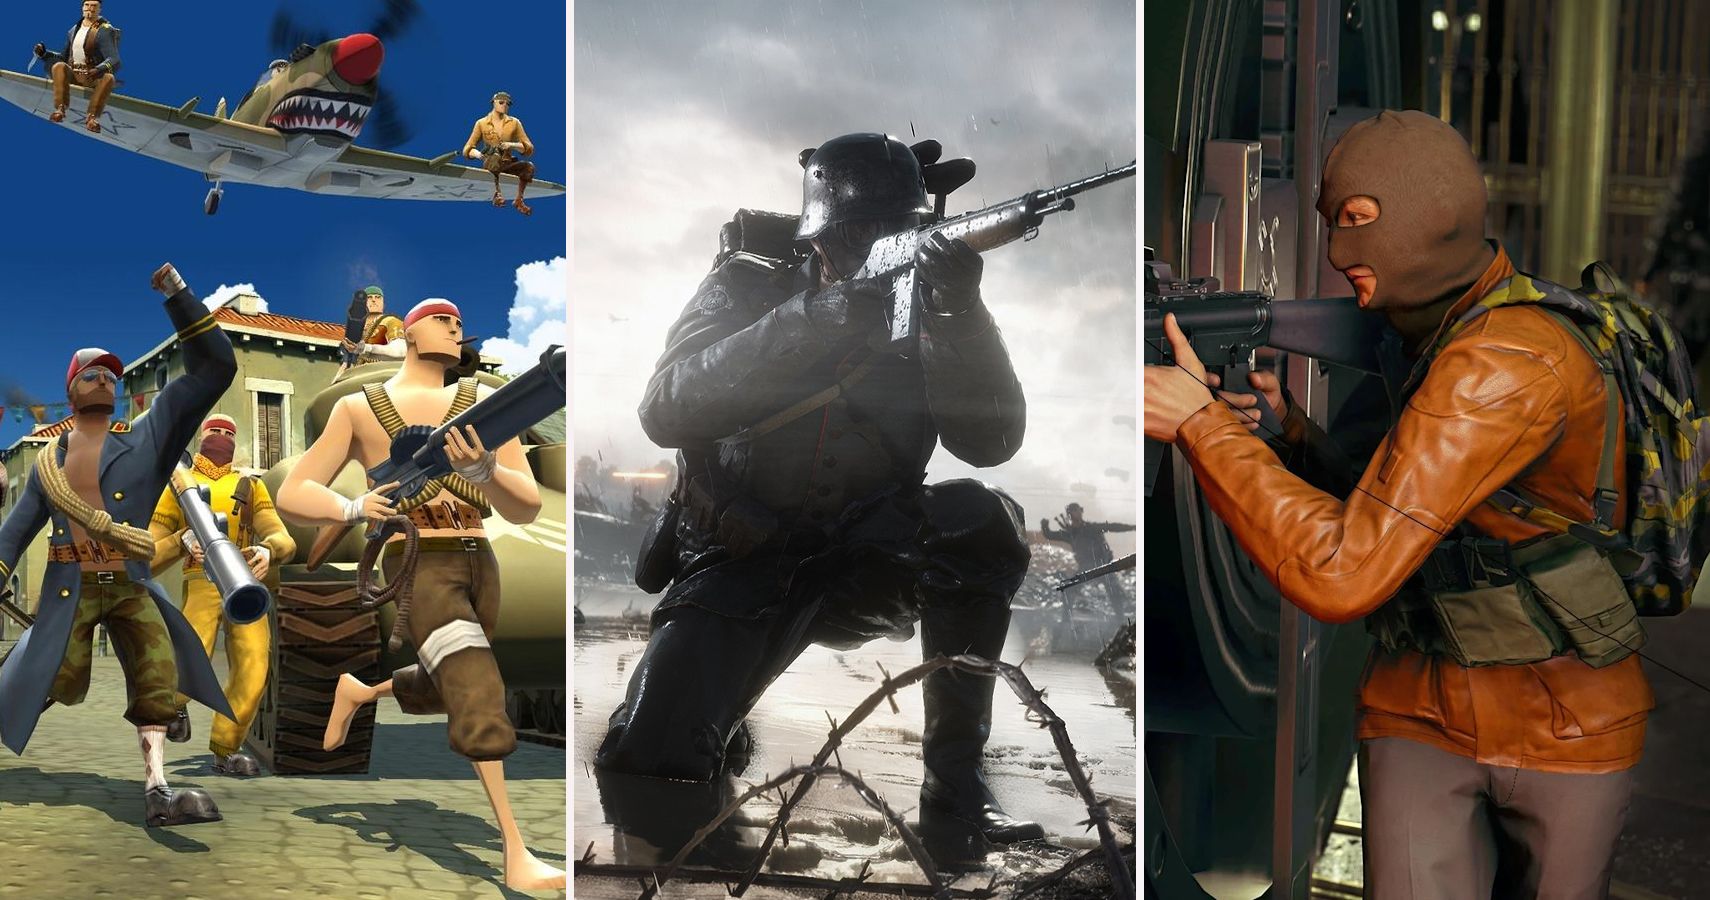 Fæstning fungere TRUE 5 Best Battlefield Games (& 5 Worst), According To Metacritic